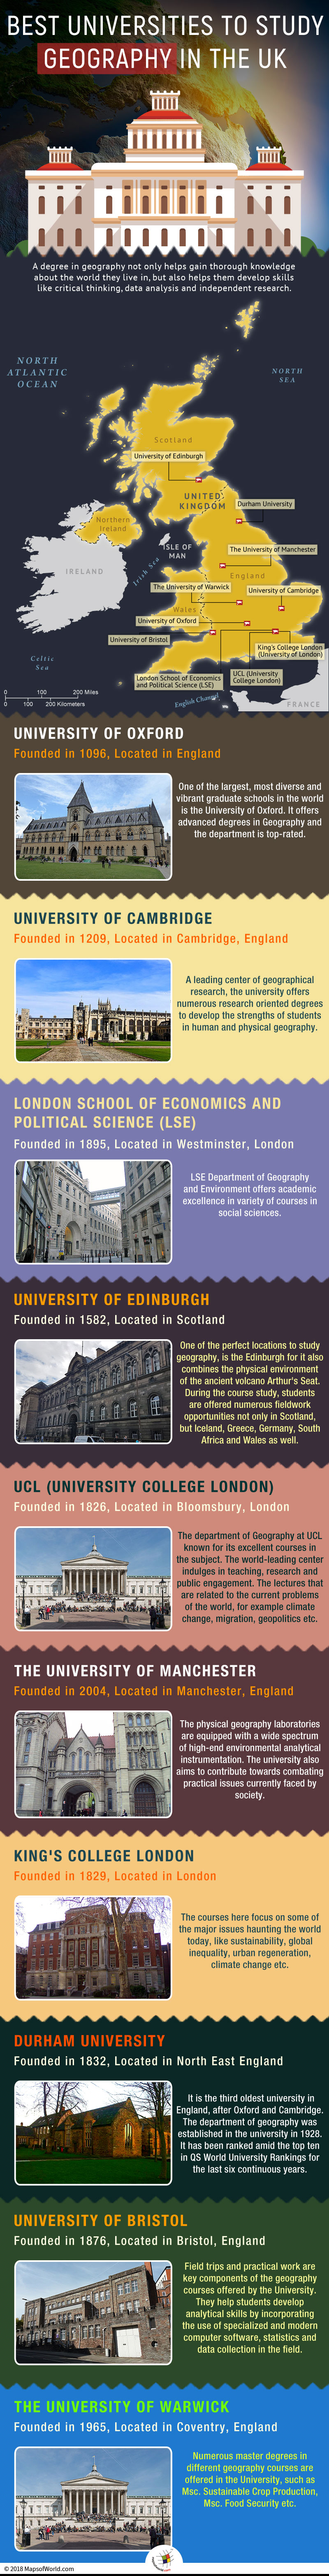 Top UK Universities to Study Geography